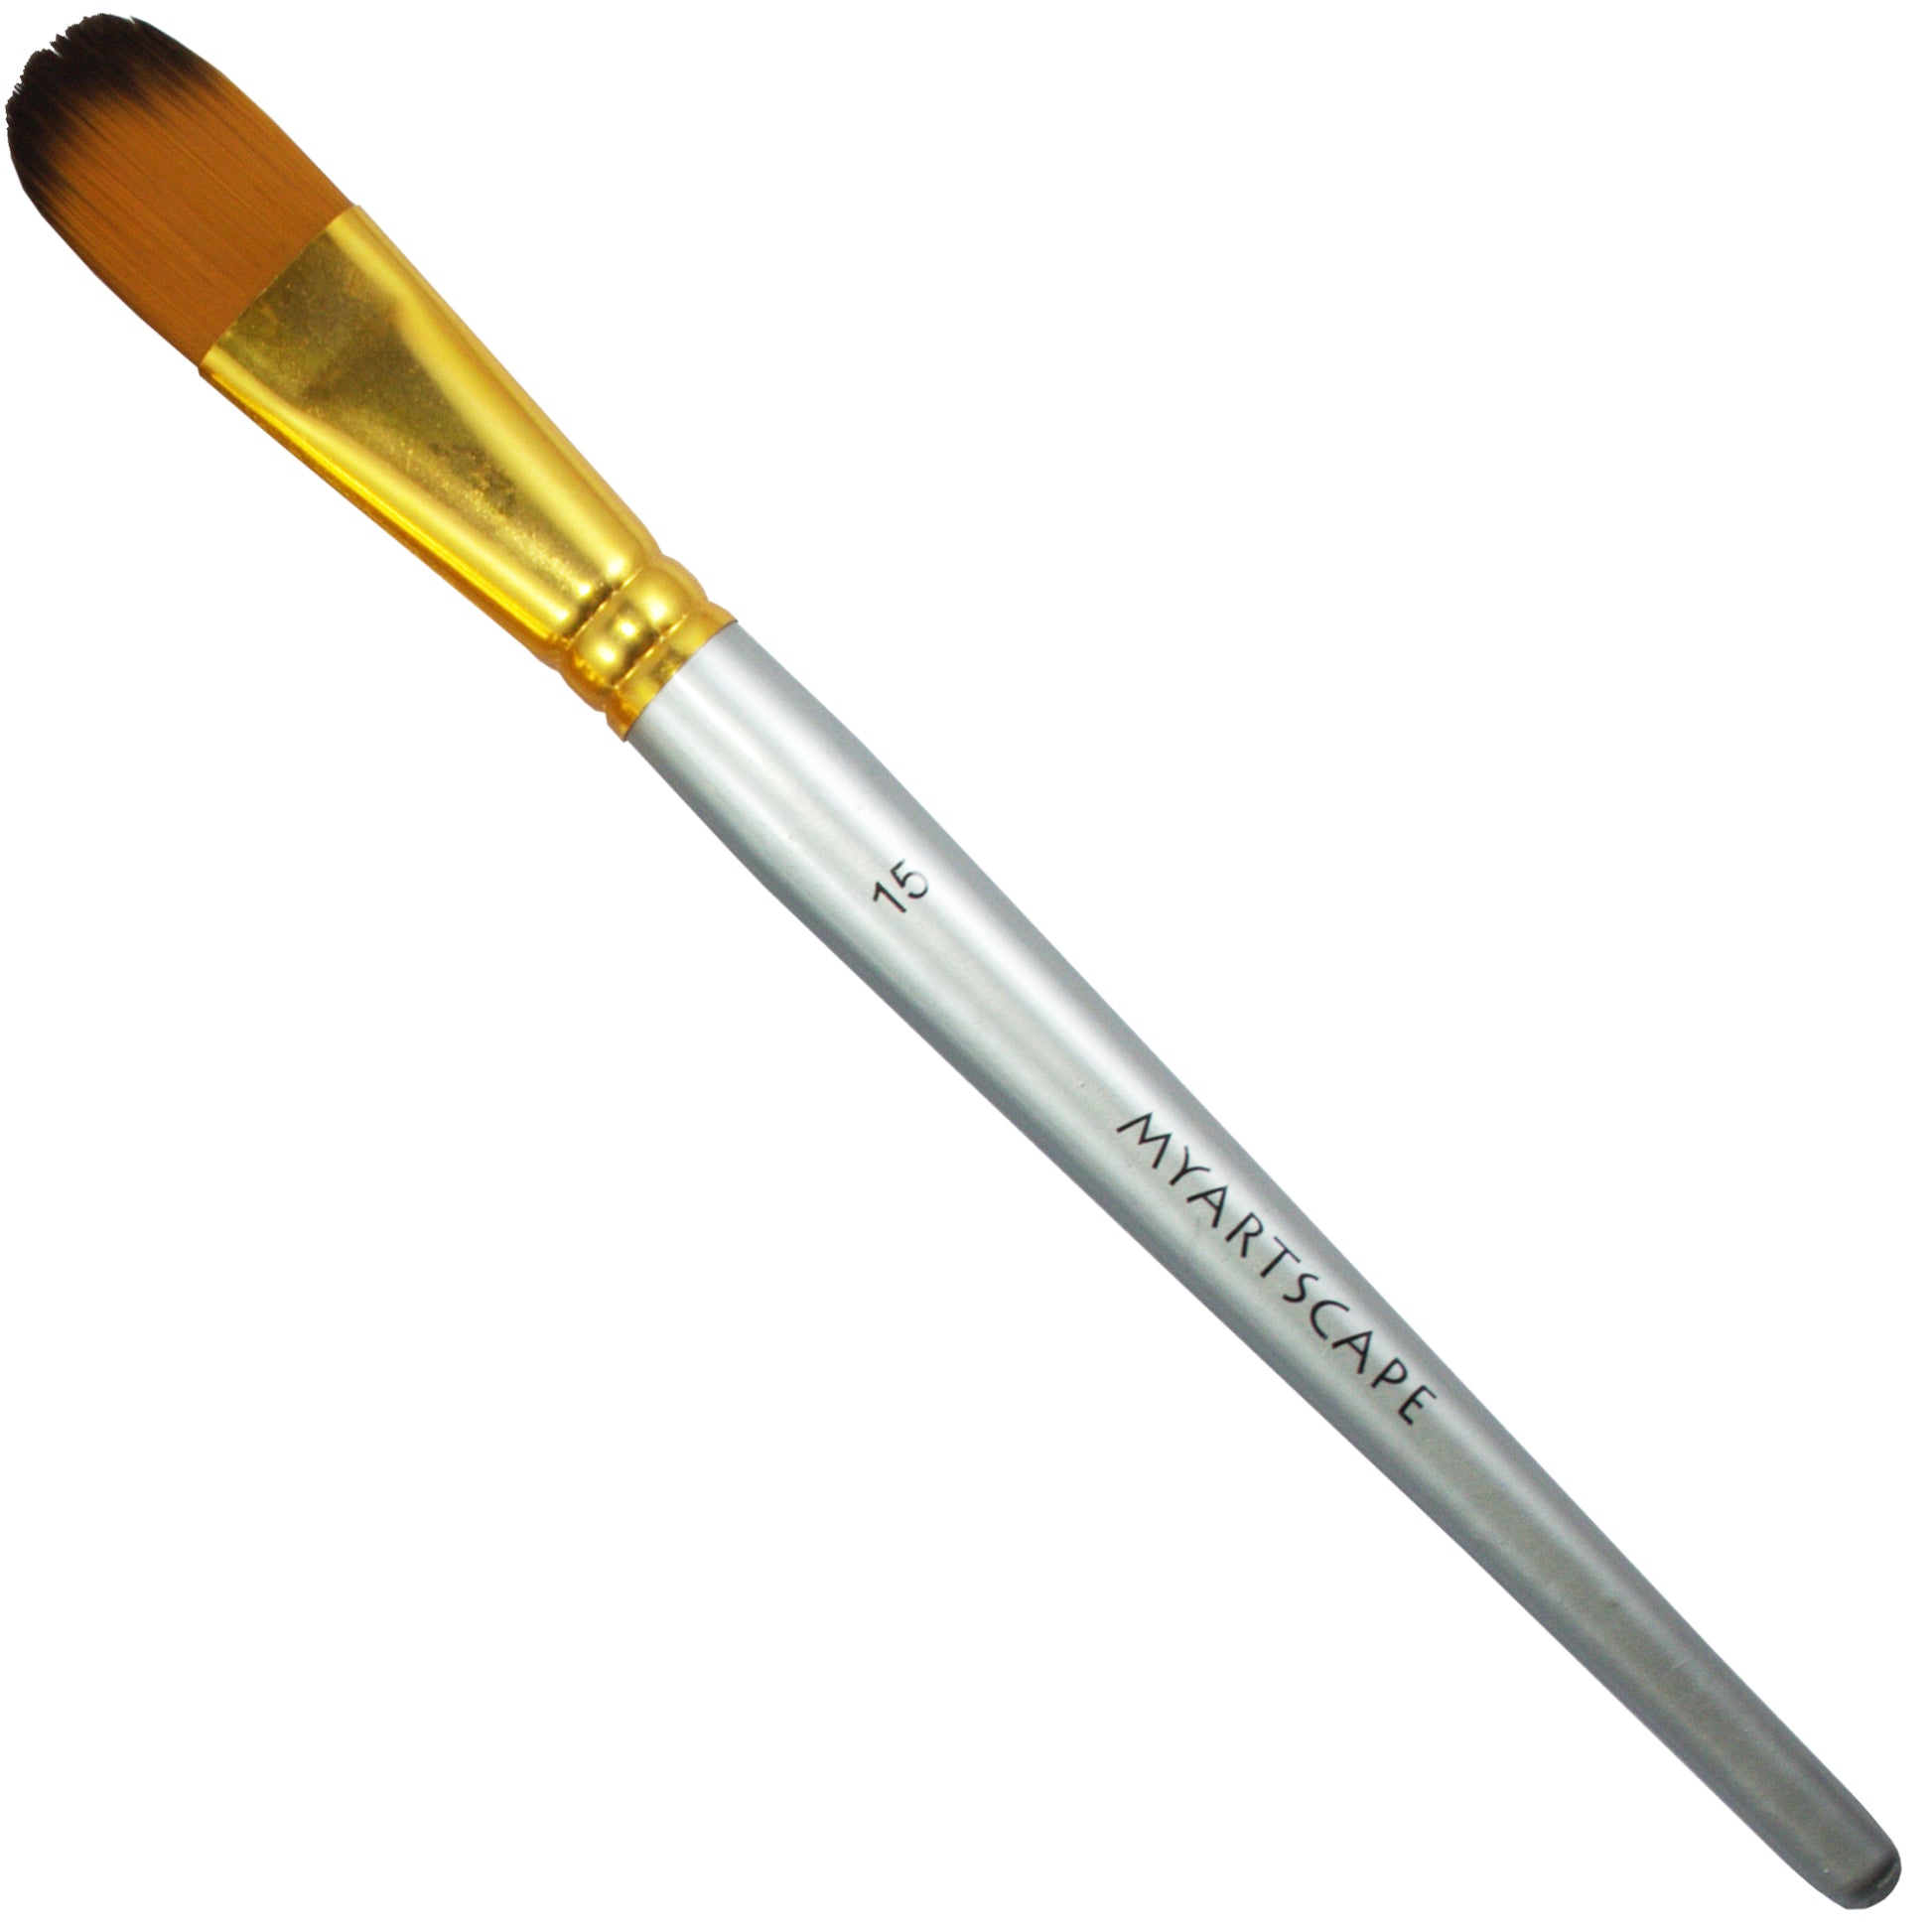 Paint Brushes - 15 Pc Art Brush Set, Short Handle Artist